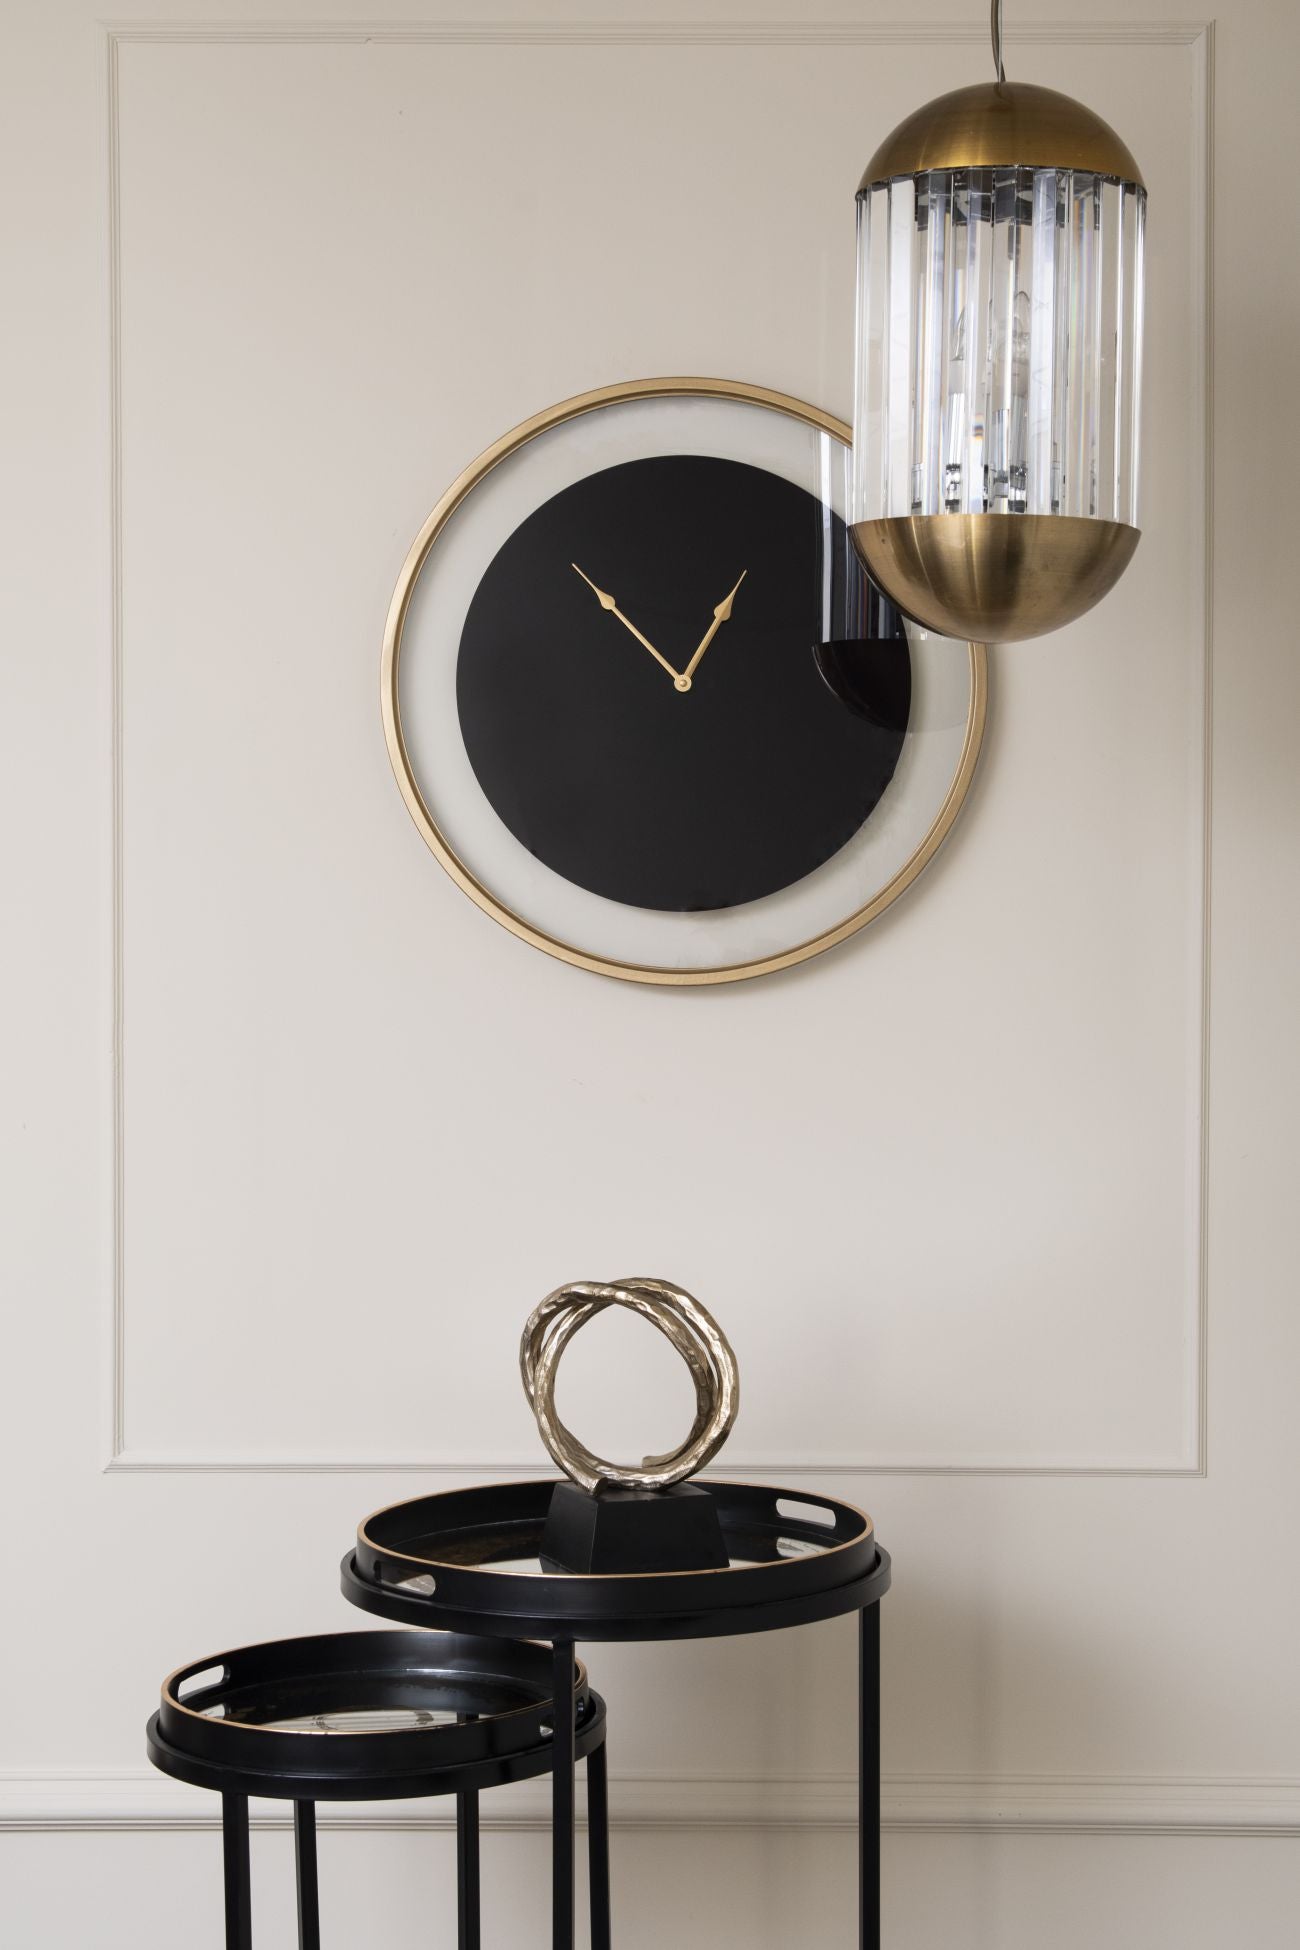 CYRO Black Round Wall Clock 60cm